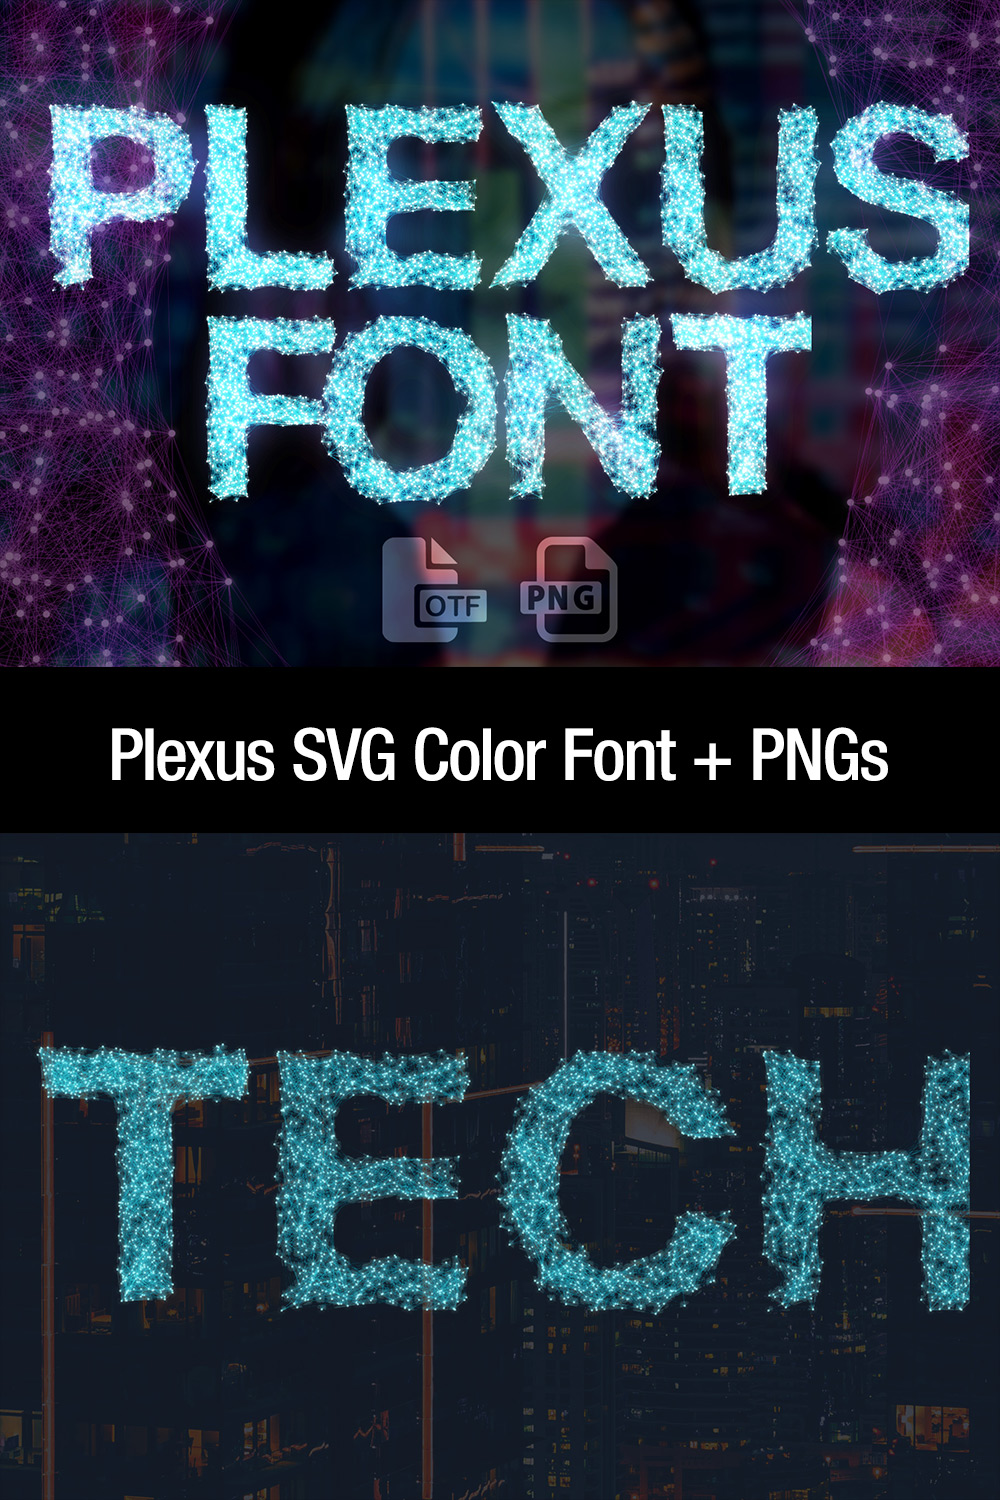 MS Plexus Opentype SVG Font and PNG pinterest image.